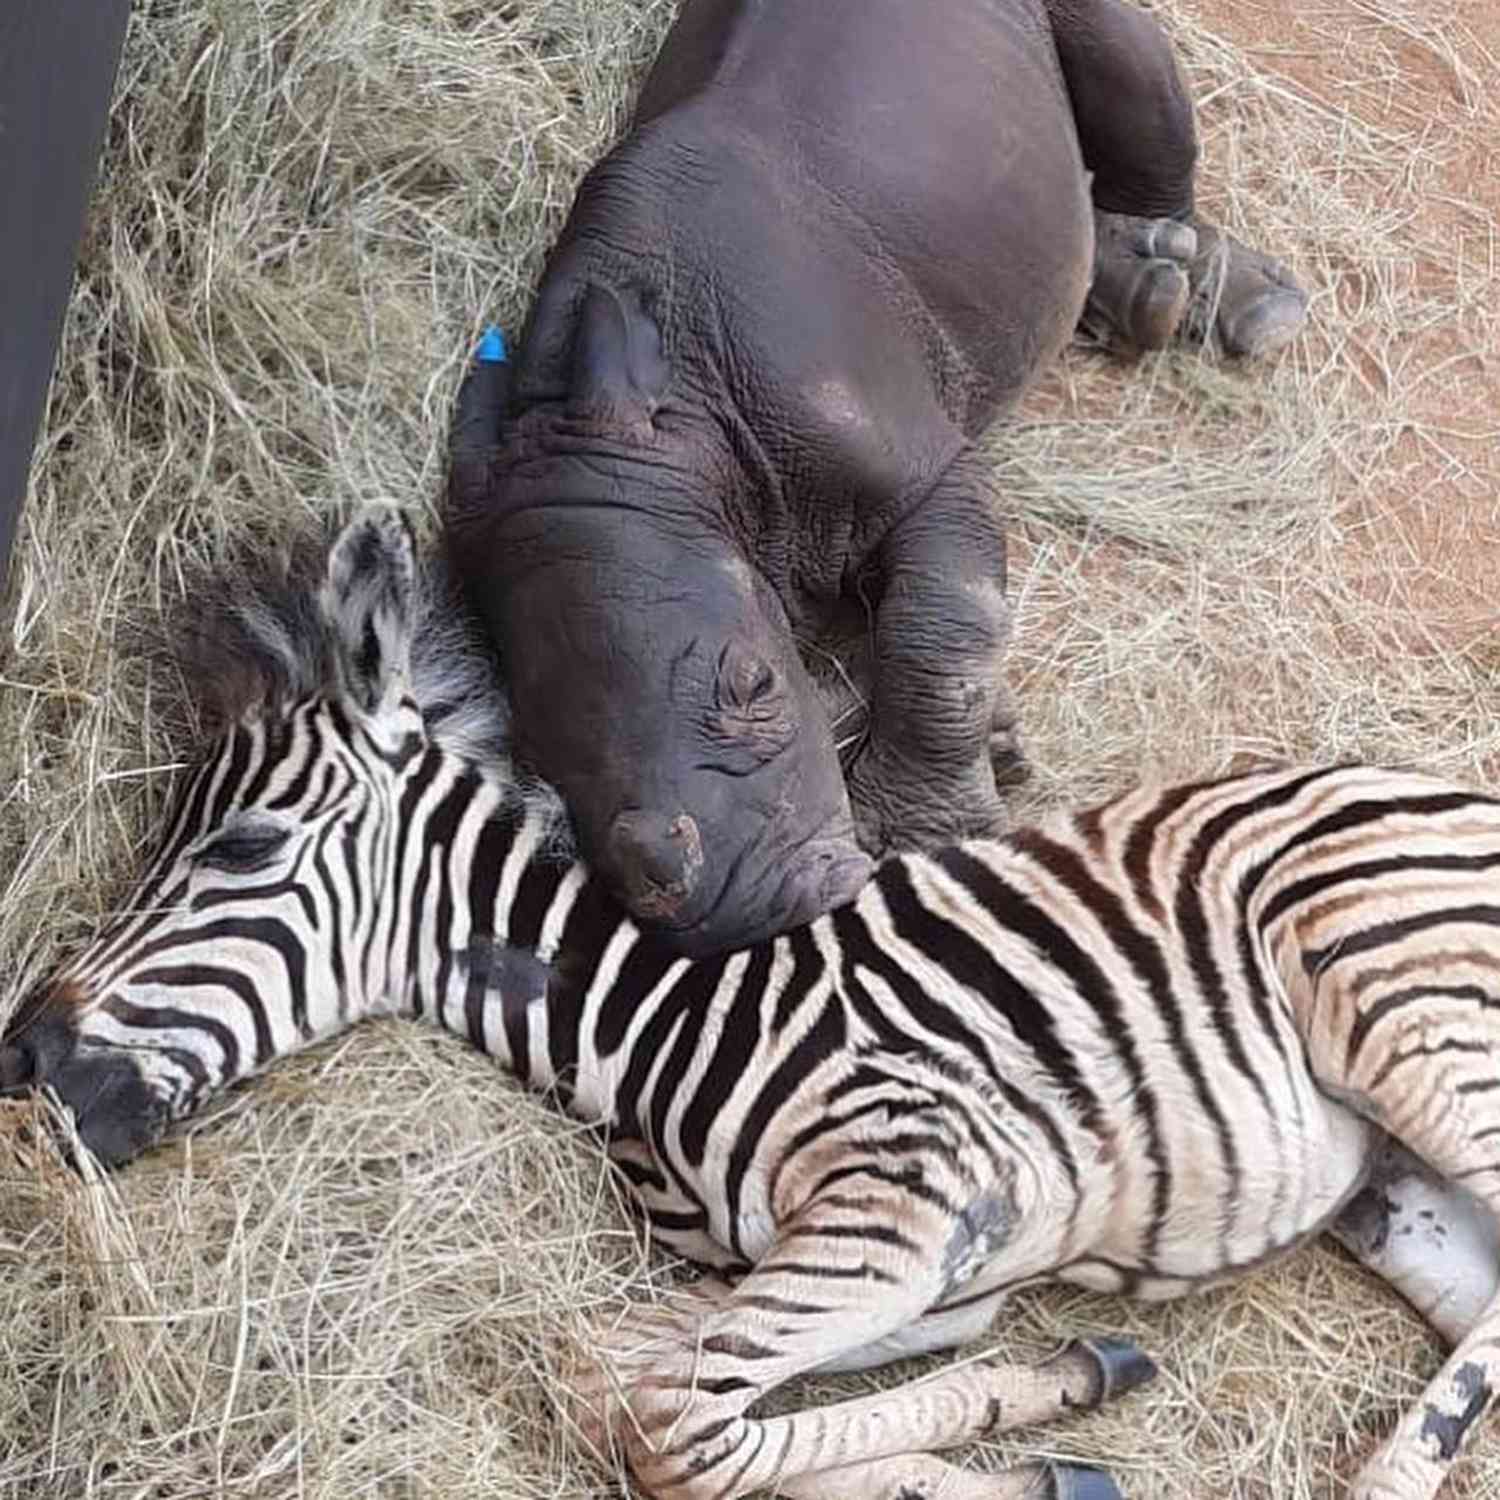 zebra and rhino snuggling